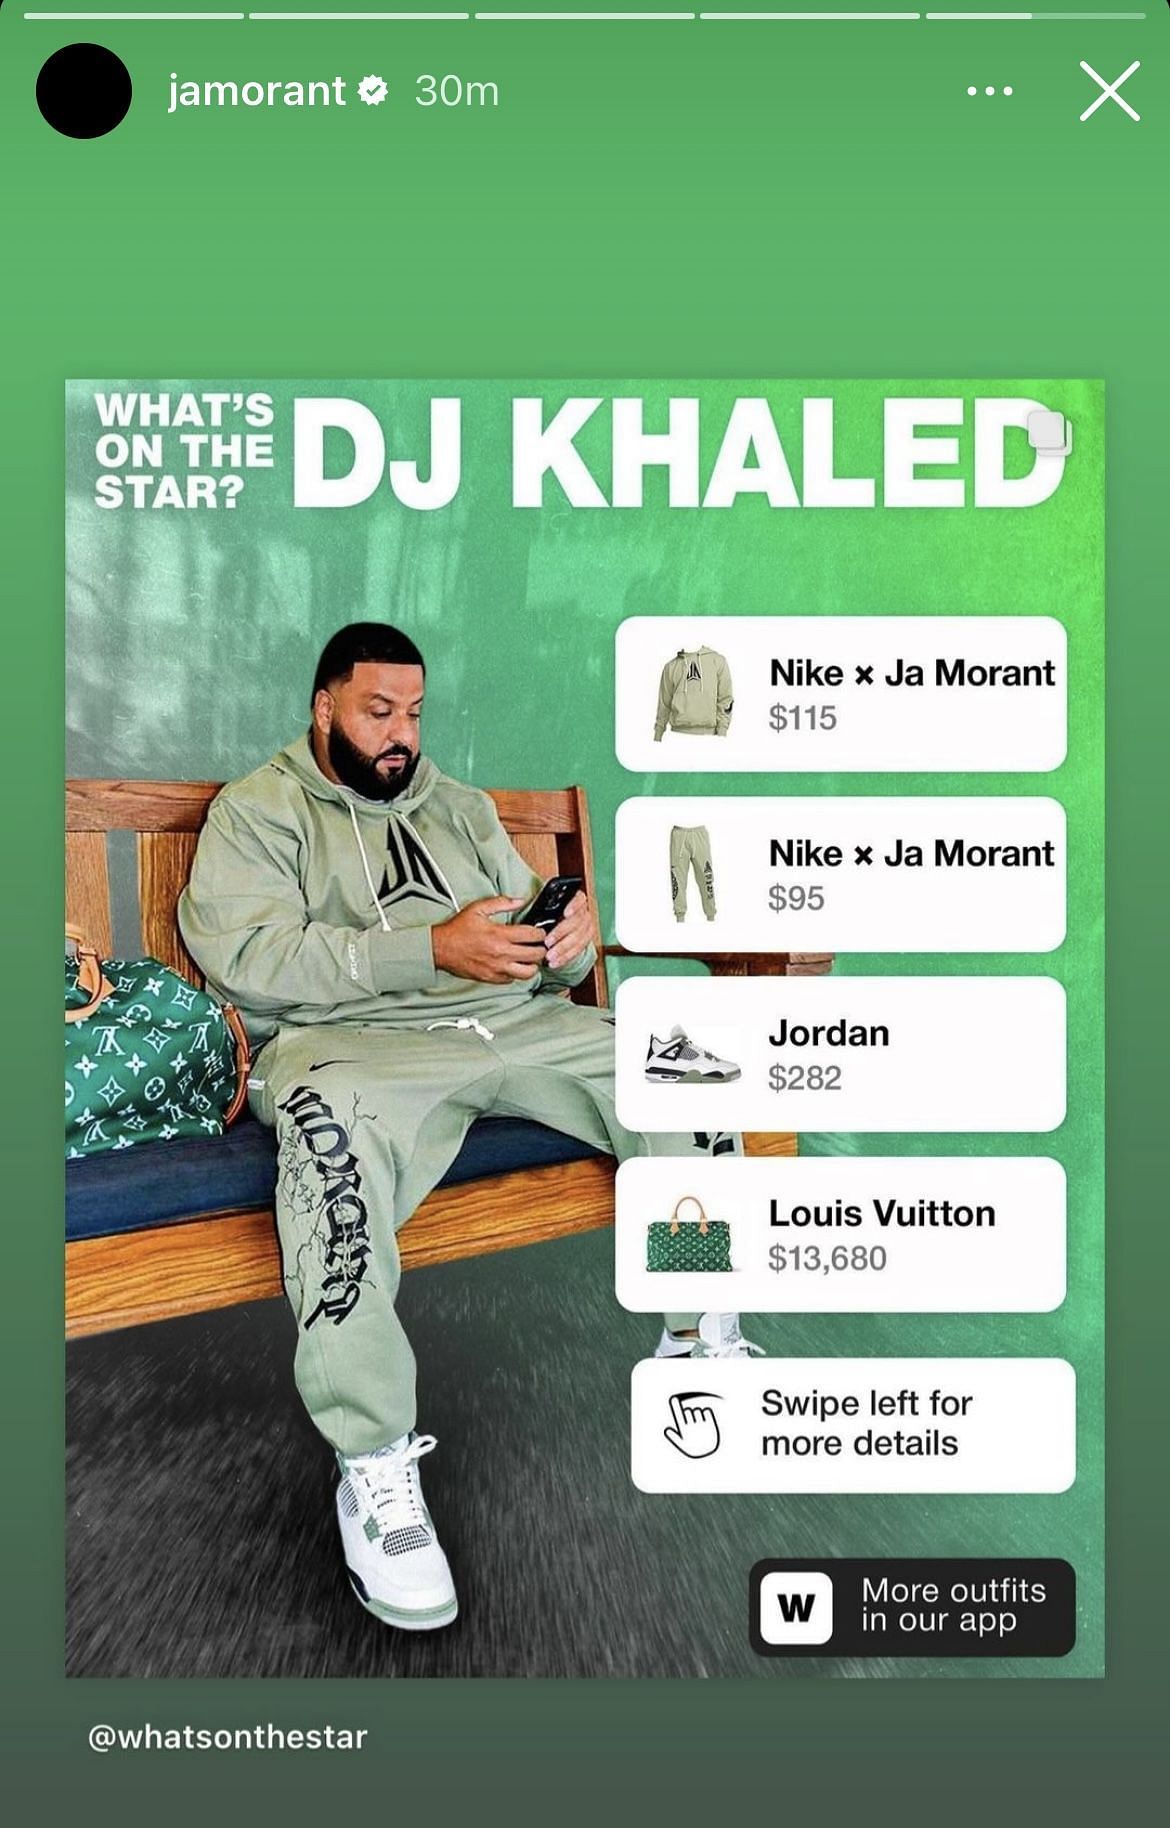 Ja Morant gives props to producer DJ Khaled rocking with the Nike x Ja Morant tracksuit.